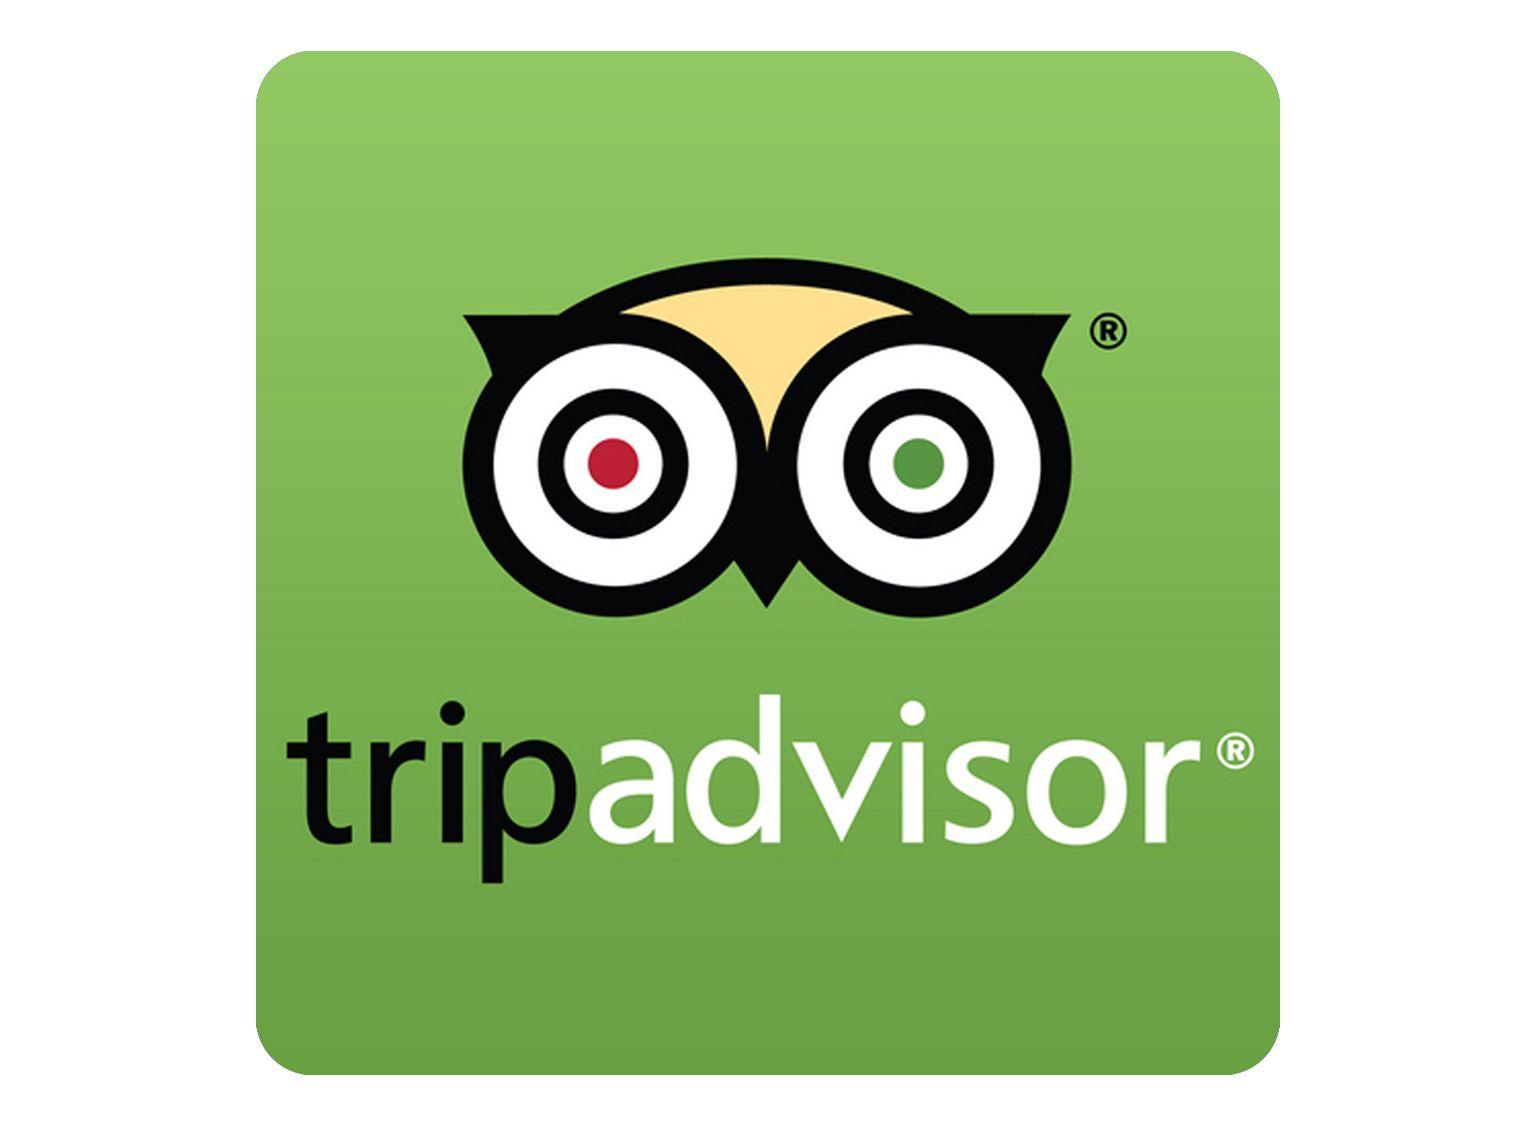 TripAdvisor App Logo - Free Tripadvisor Icon Vector 294553 | Download Tripadvisor Icon ...